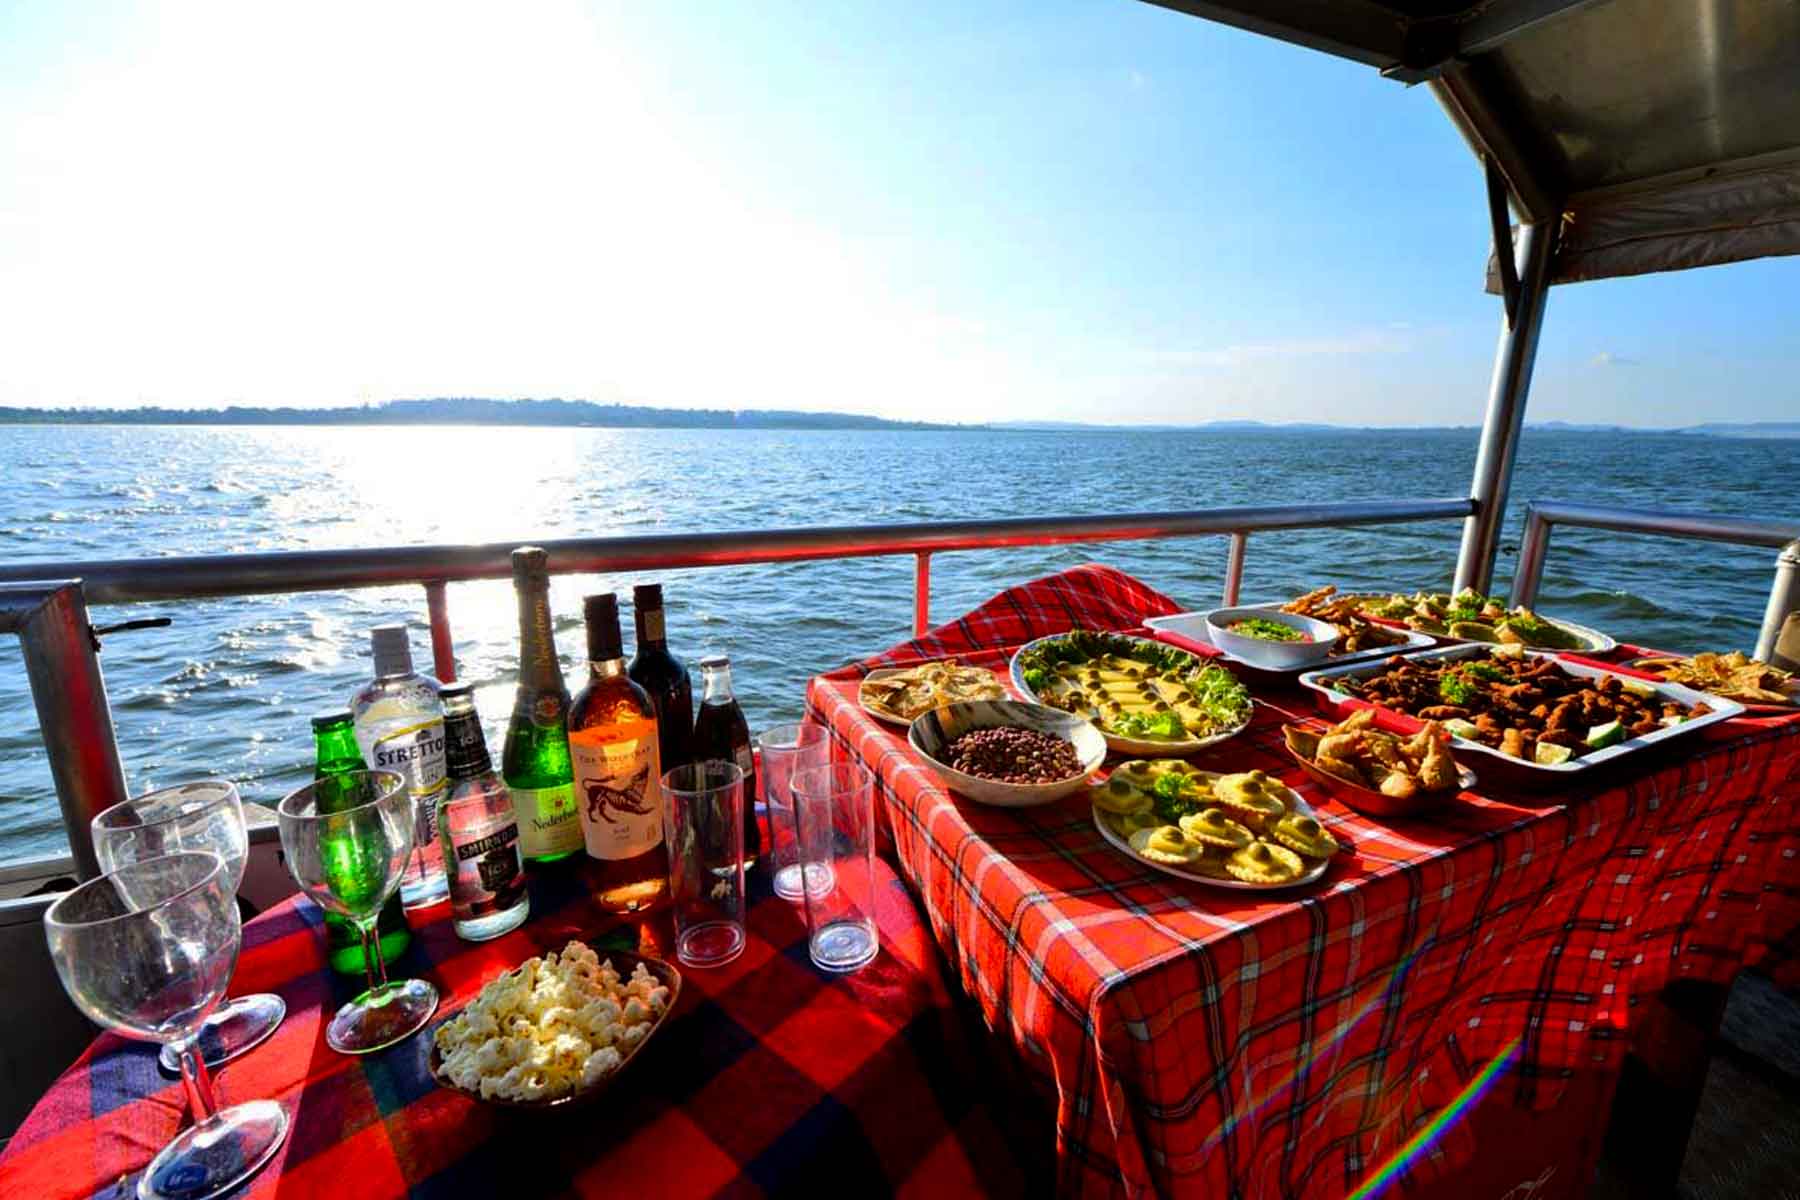 Sundowner Boat Cruise Experience on Lake Victoria.